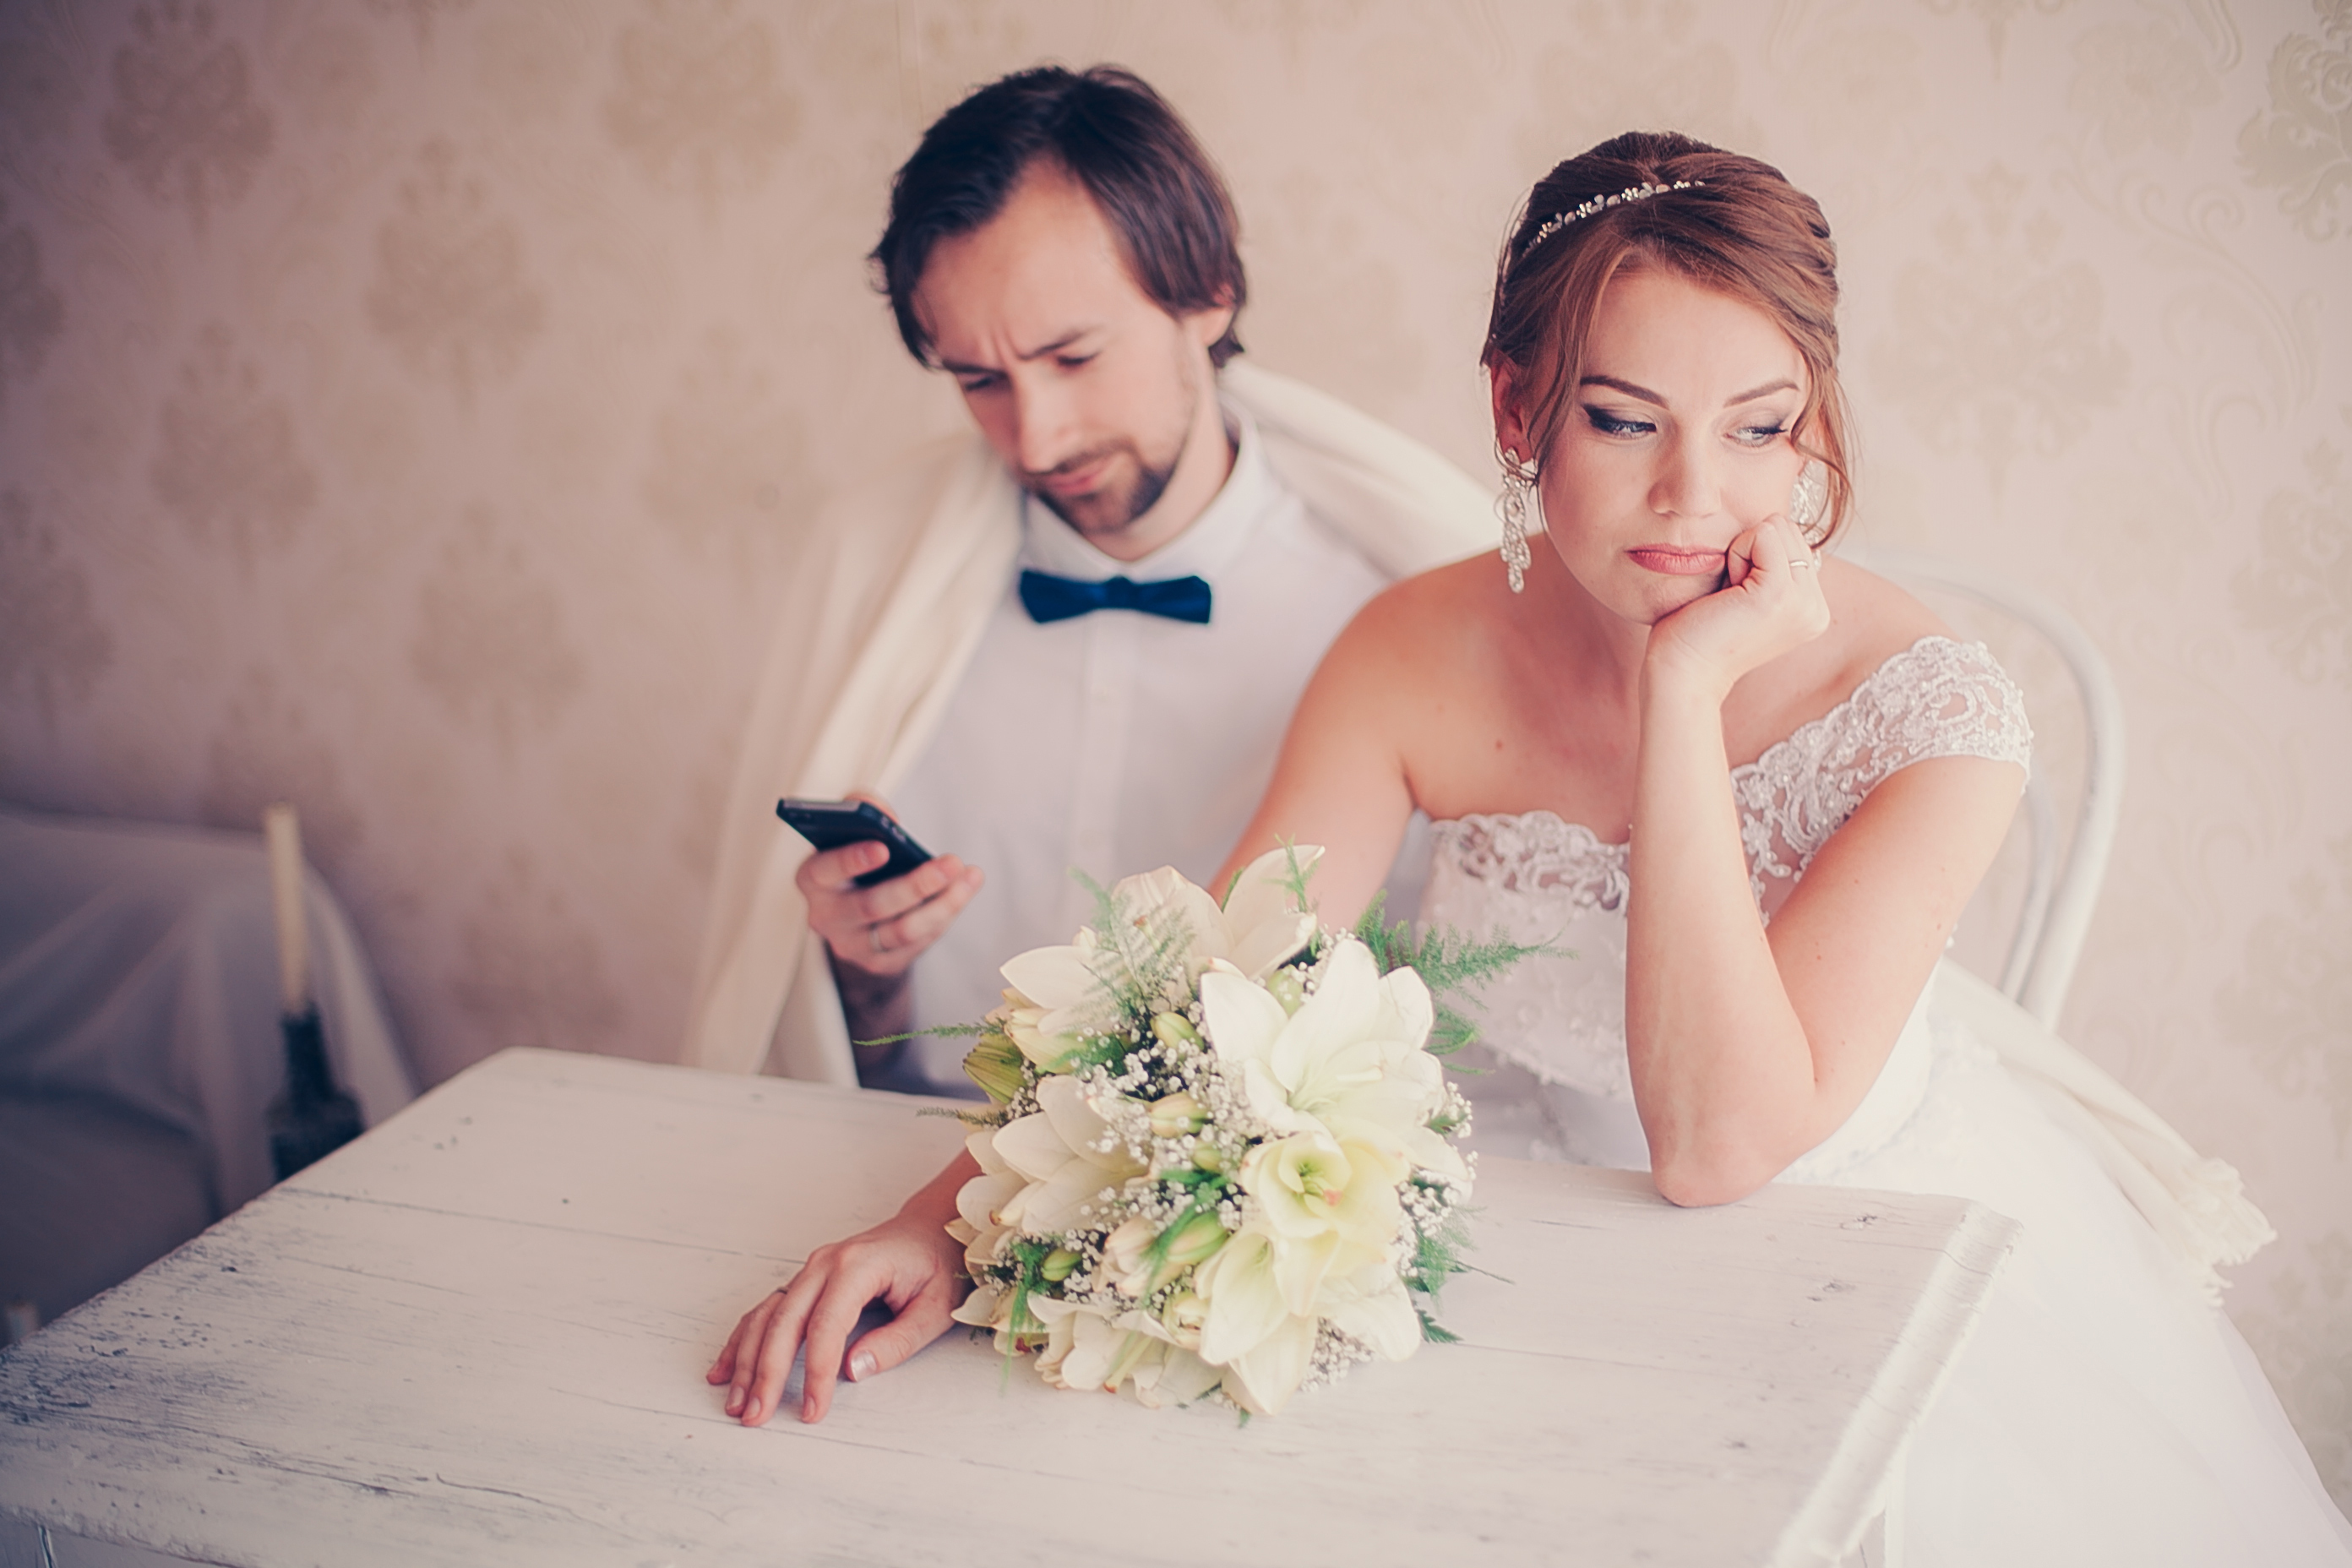 An upset bride and groom | Source: Shutterstock